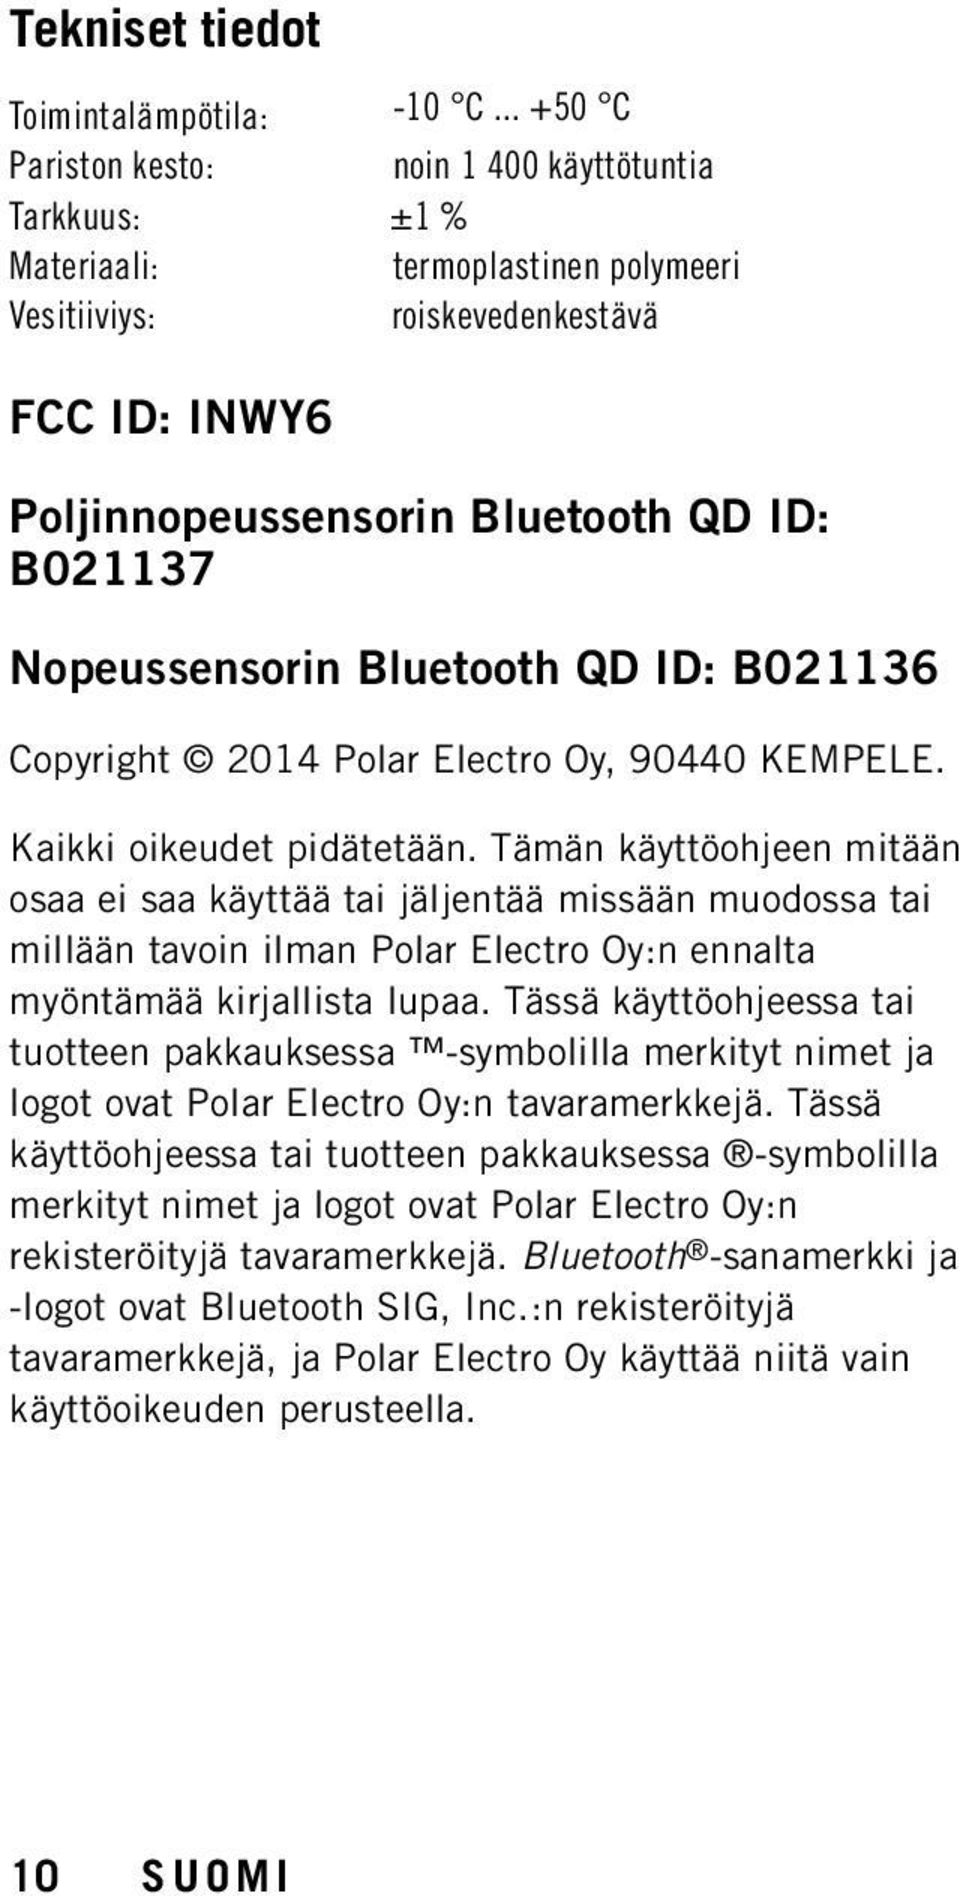 Nopeussensorin Bluetooth QD ID: B021136 Copyright 2014 Polar Electro Oy, 90440 KEMPELE. Kaikki oikeudet pidätetään.